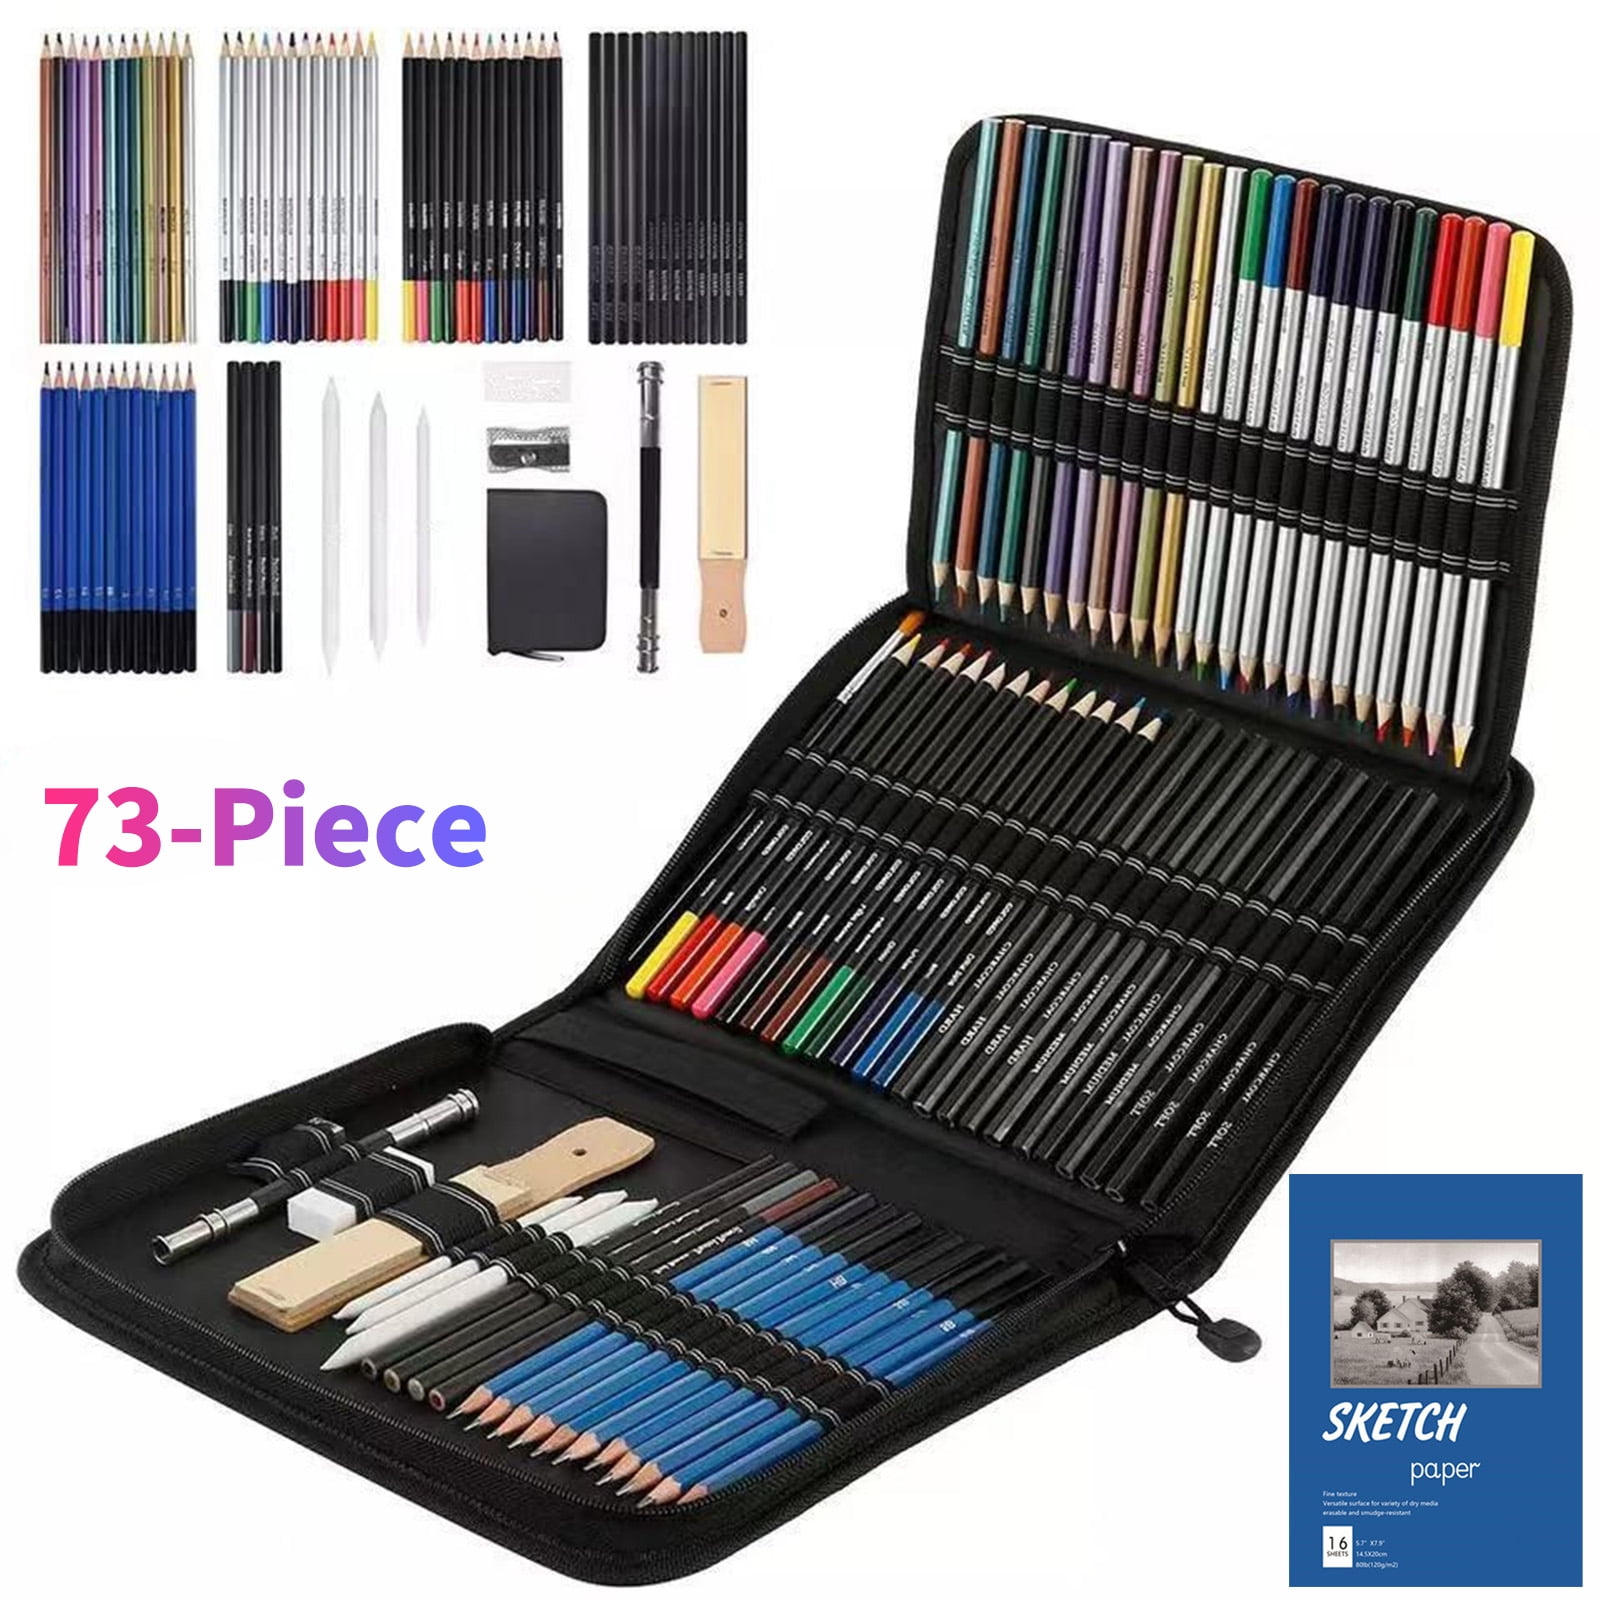 72PCS Drawing Pencil Set Sketching Artist Colouring Art Kit Adult Professional